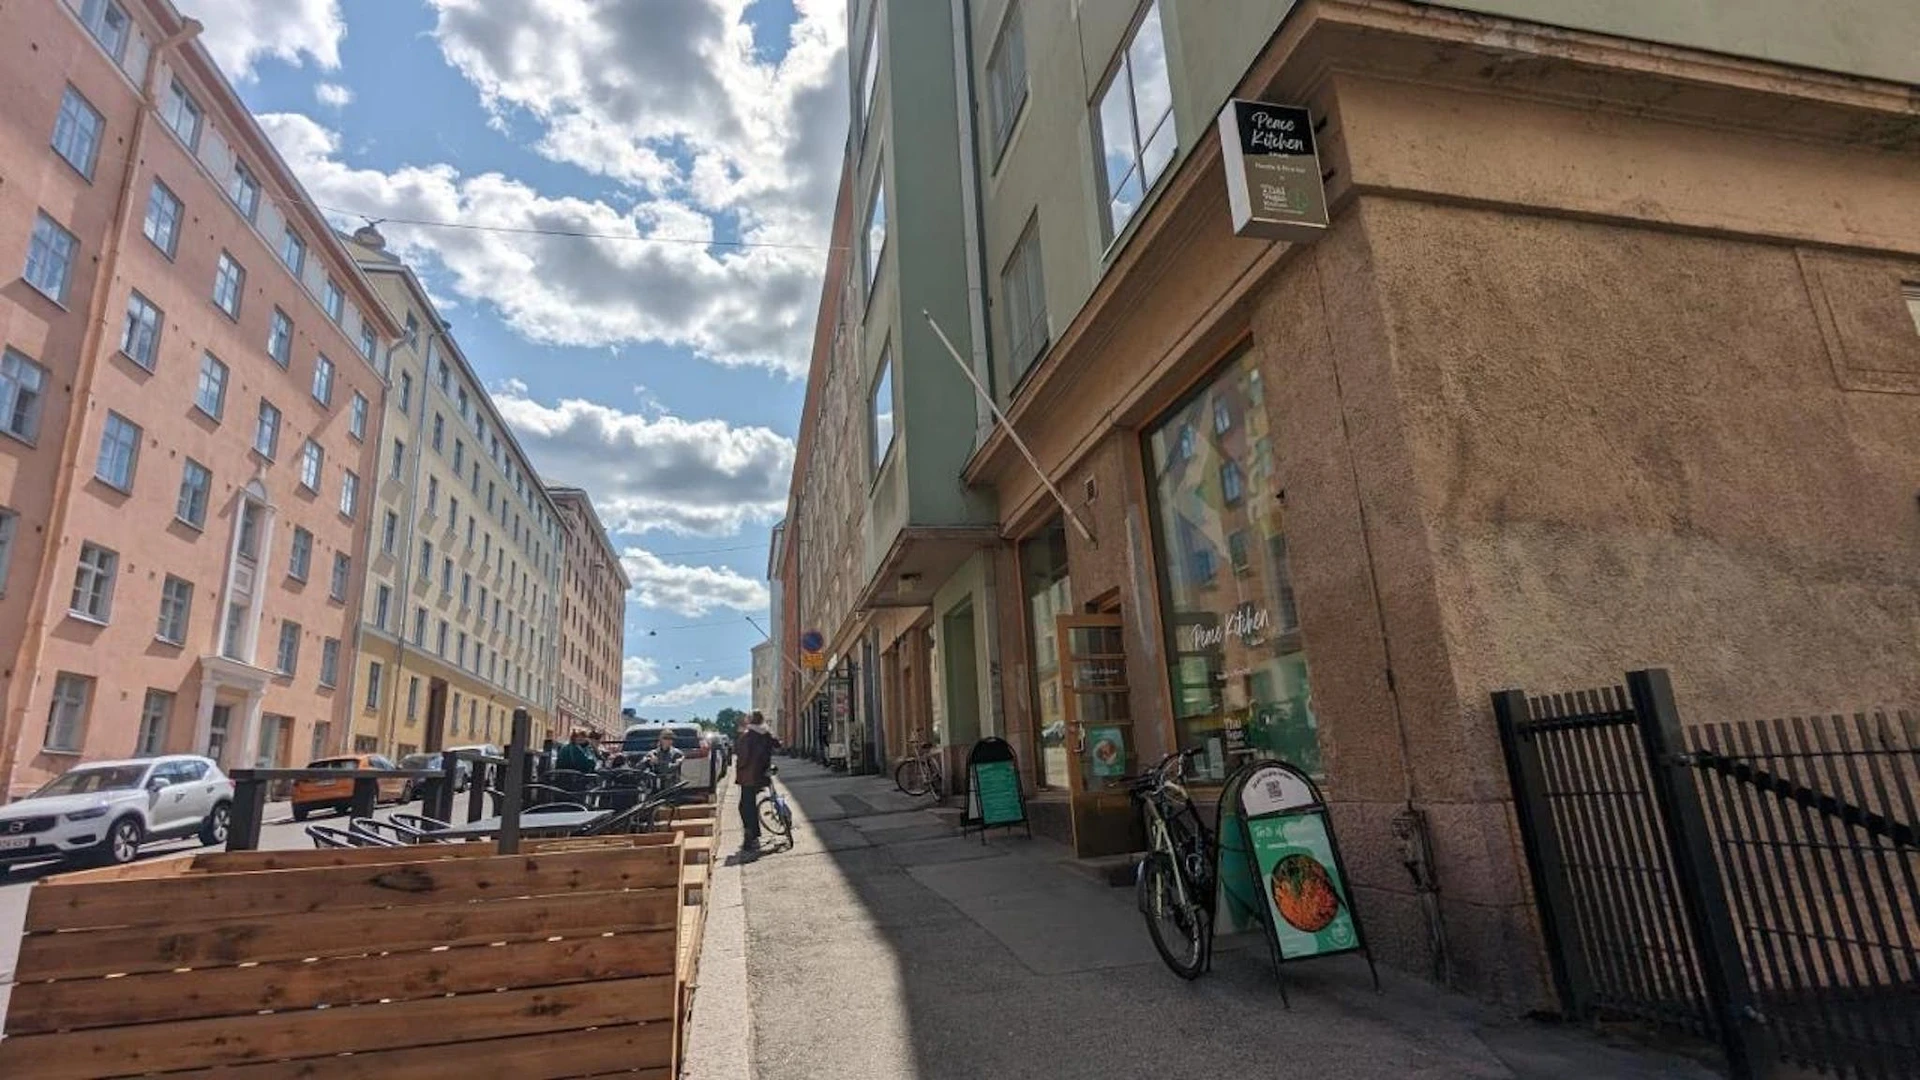 Modern and bright flat in Helsinki